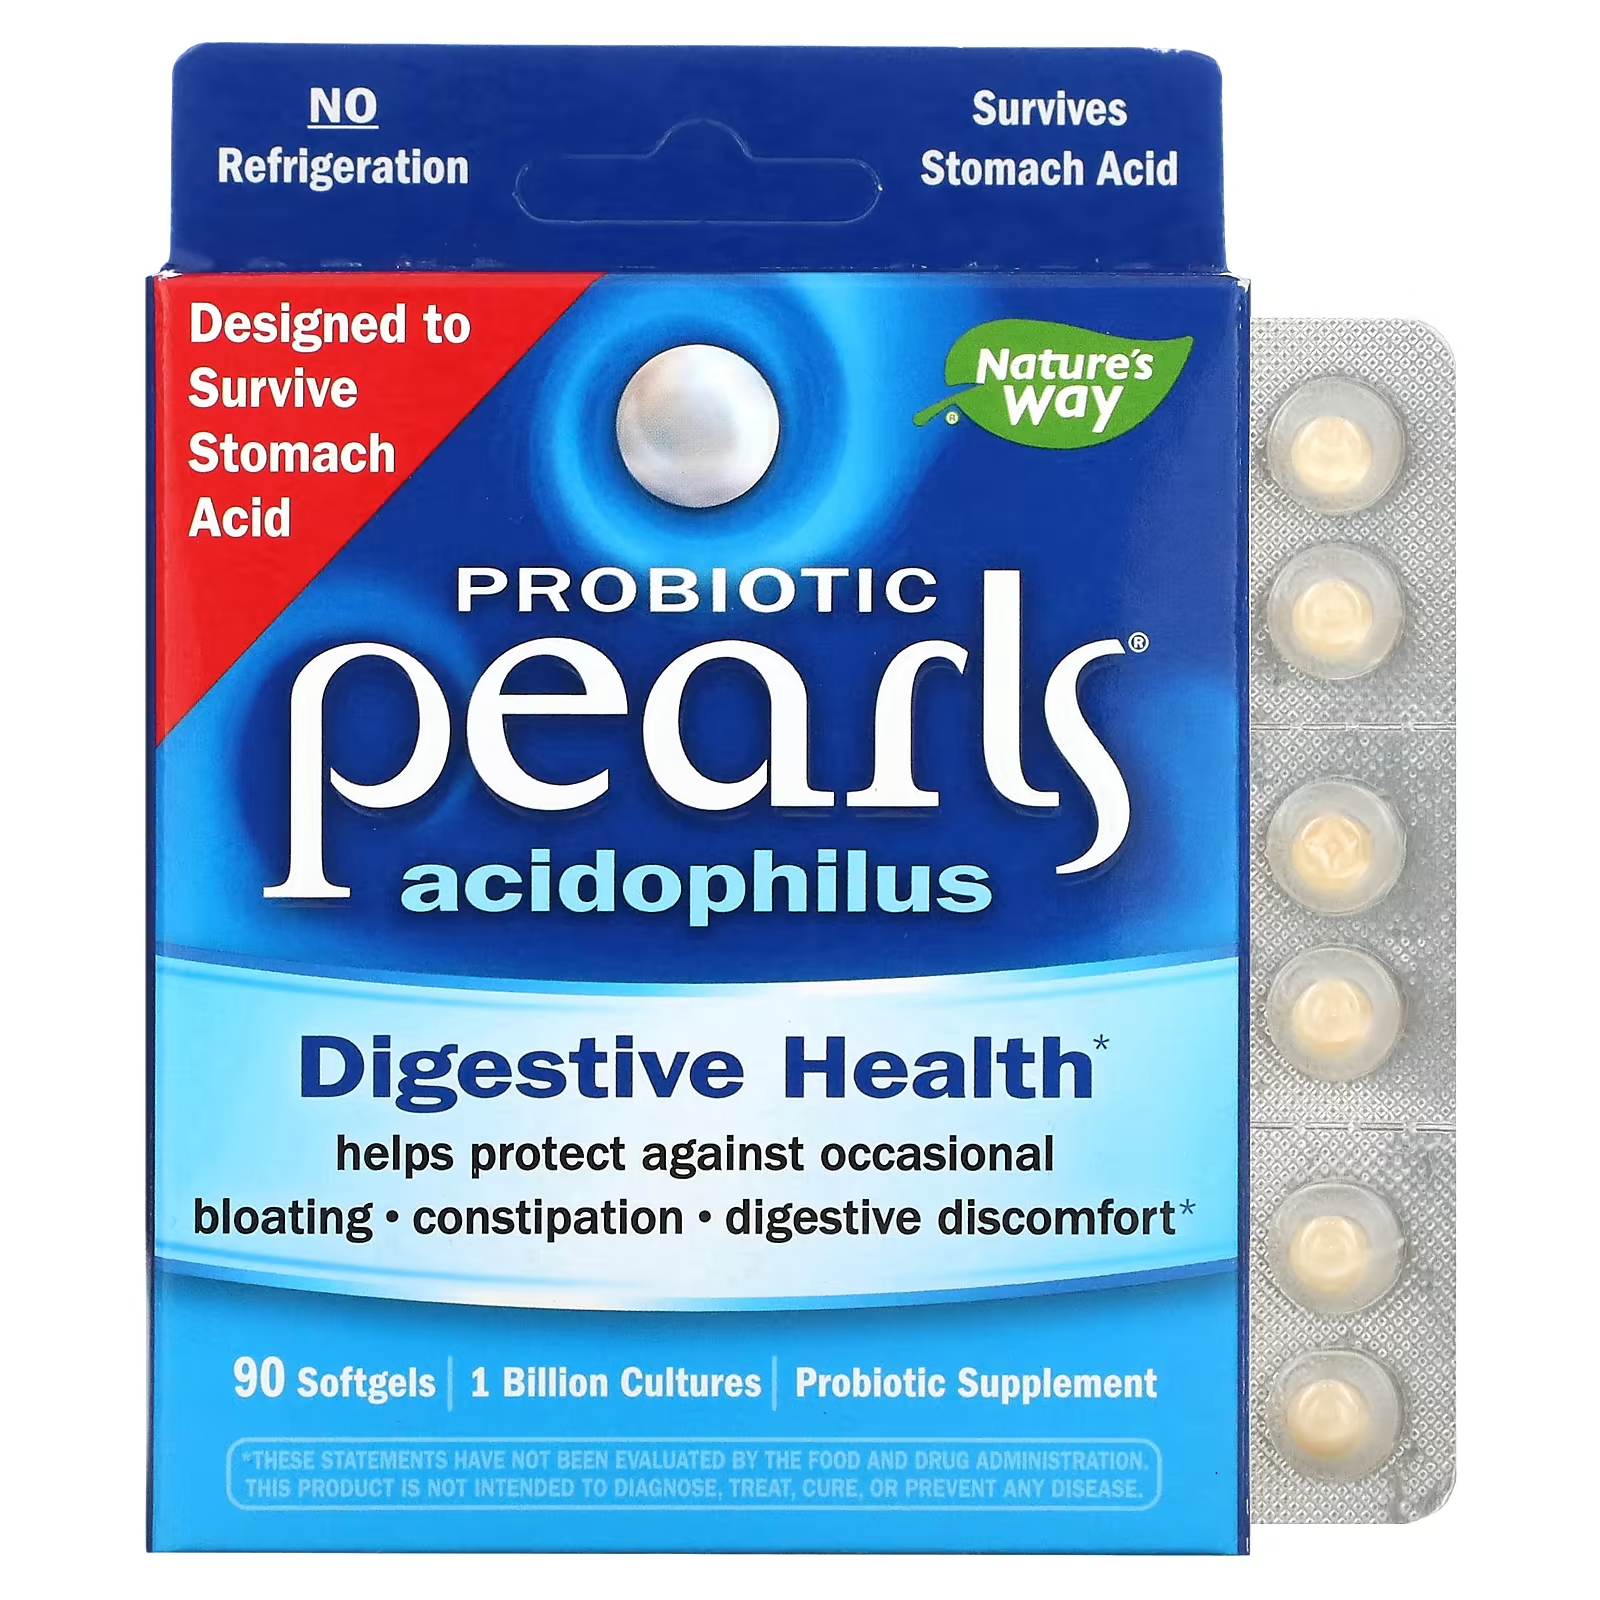 Nature's Way Пробиотические жемчужины Acidophilus, 1 миллиард КОЕ, 90 мягких таблеток nature s way пробиотические жемчужины acidophilus 1 миллиард кое 90 мягких таблеток